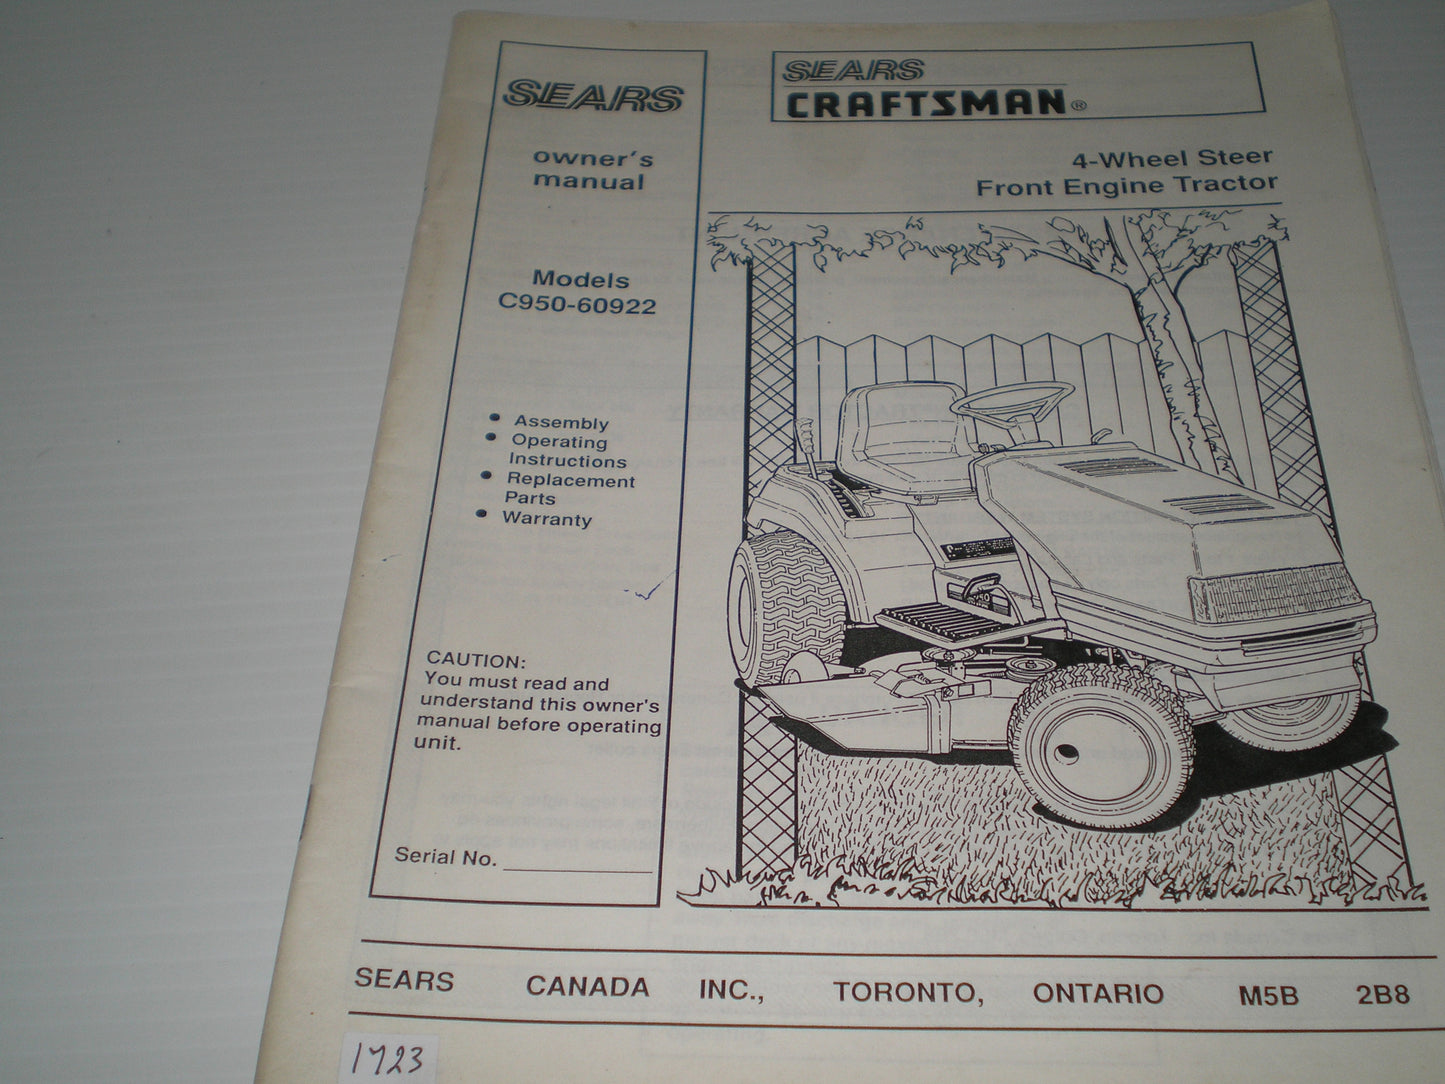 CRAFSTMAN SEARS  4-Wheel Steer Front Engine Tractor  Model # C950-60922  Owner's Manual  #1669